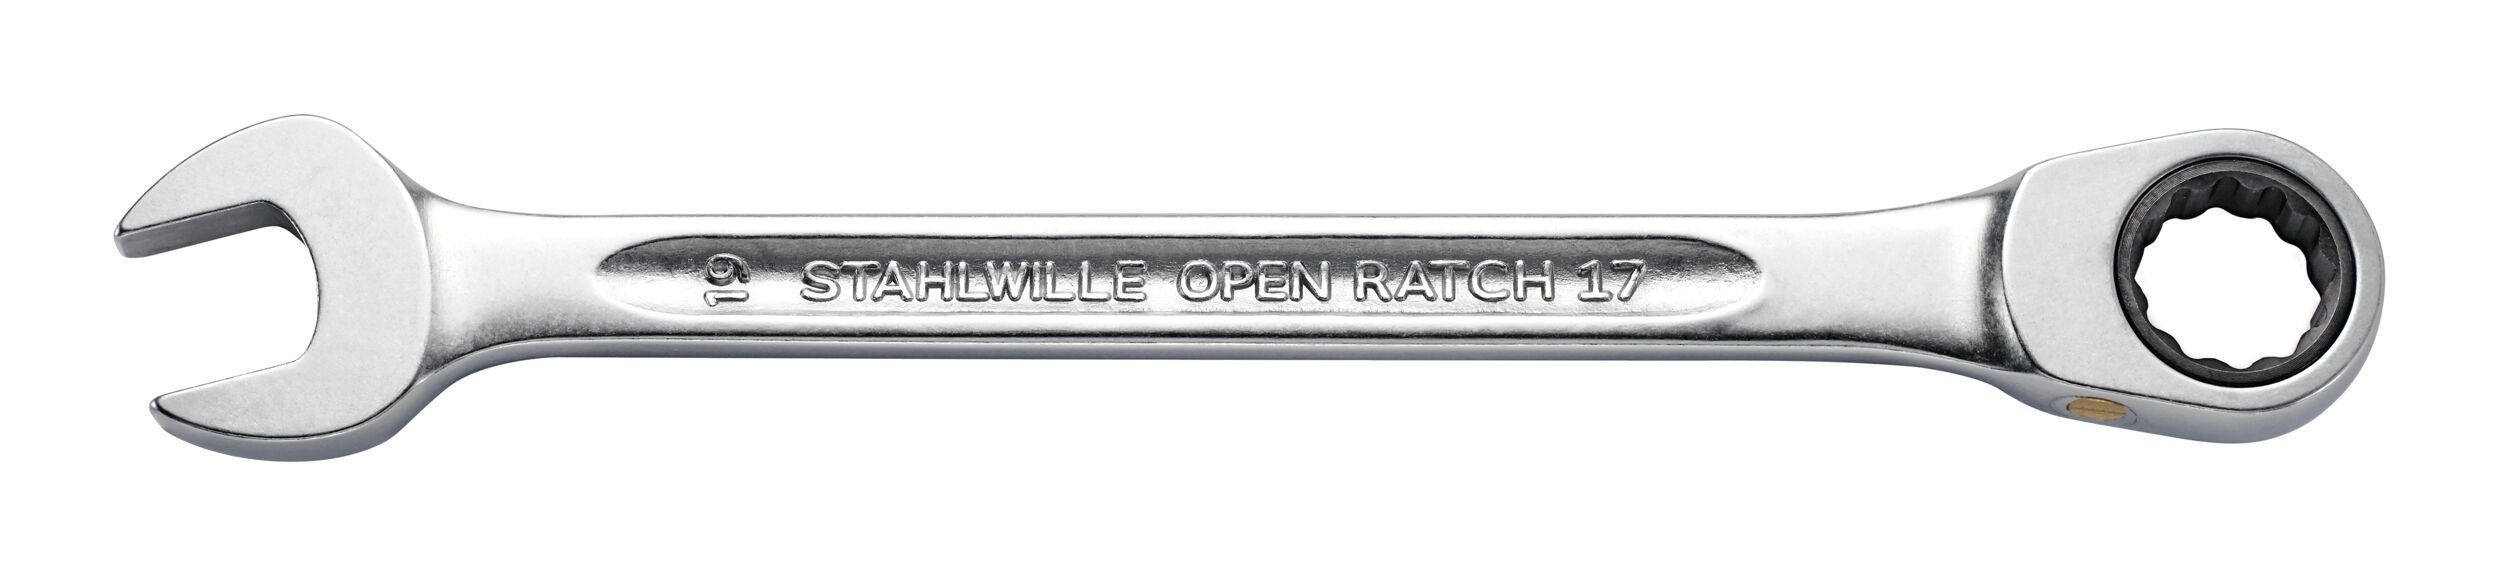 Stahlwille Ratschenringschlüssel, Maul-Ringratschen-Schlüssel gerade 18 mm